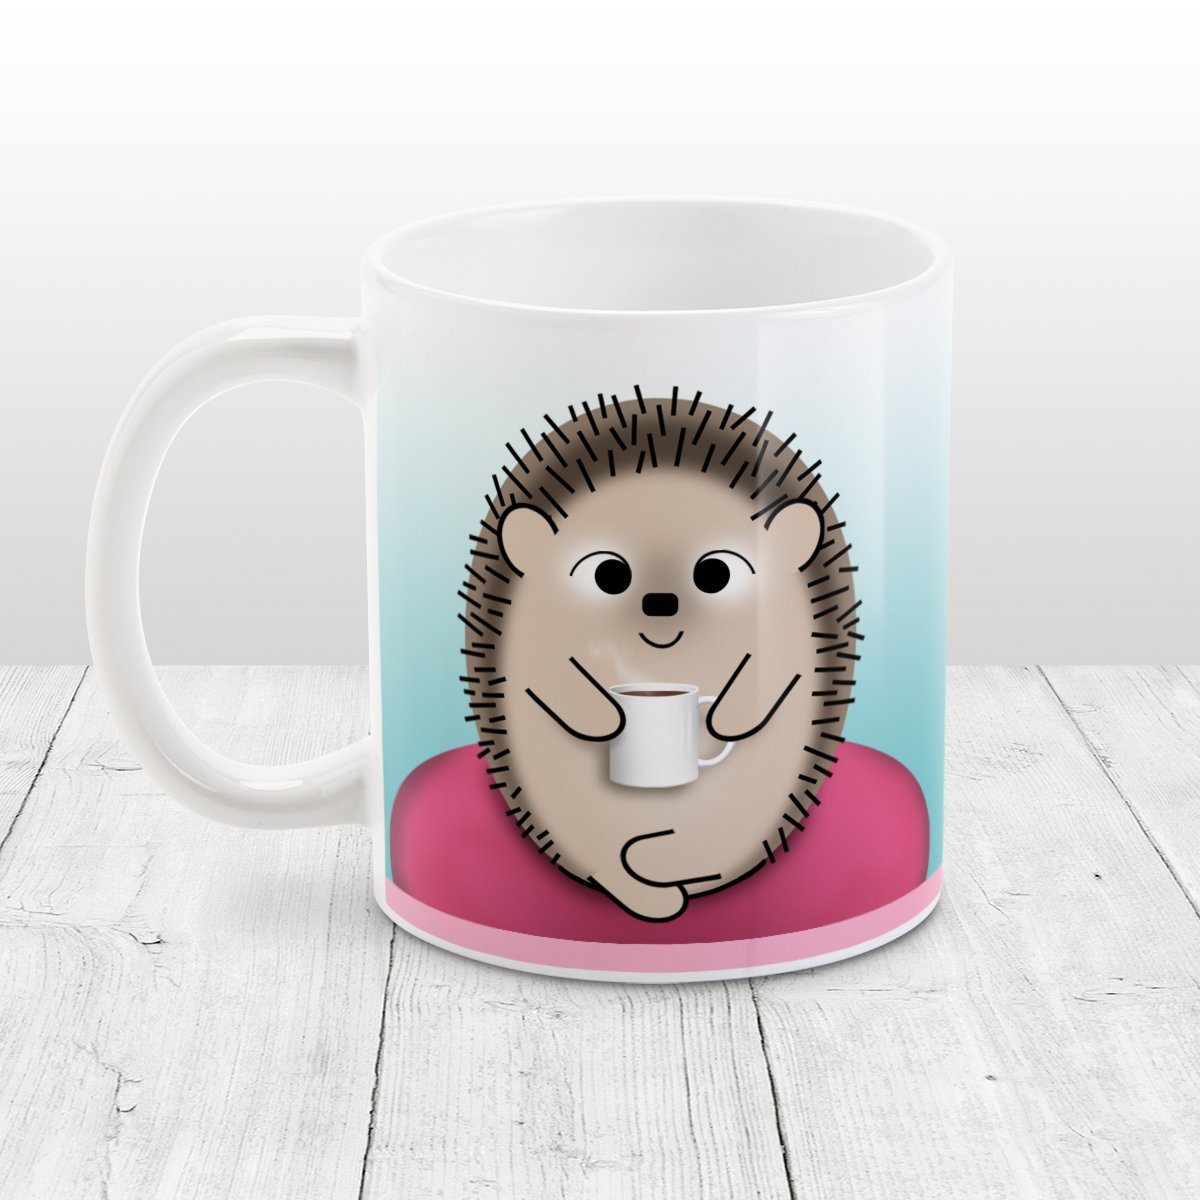 My Time to Relax - Pink Coffee Hedgehog Mug at Amy's Coffee Mugs